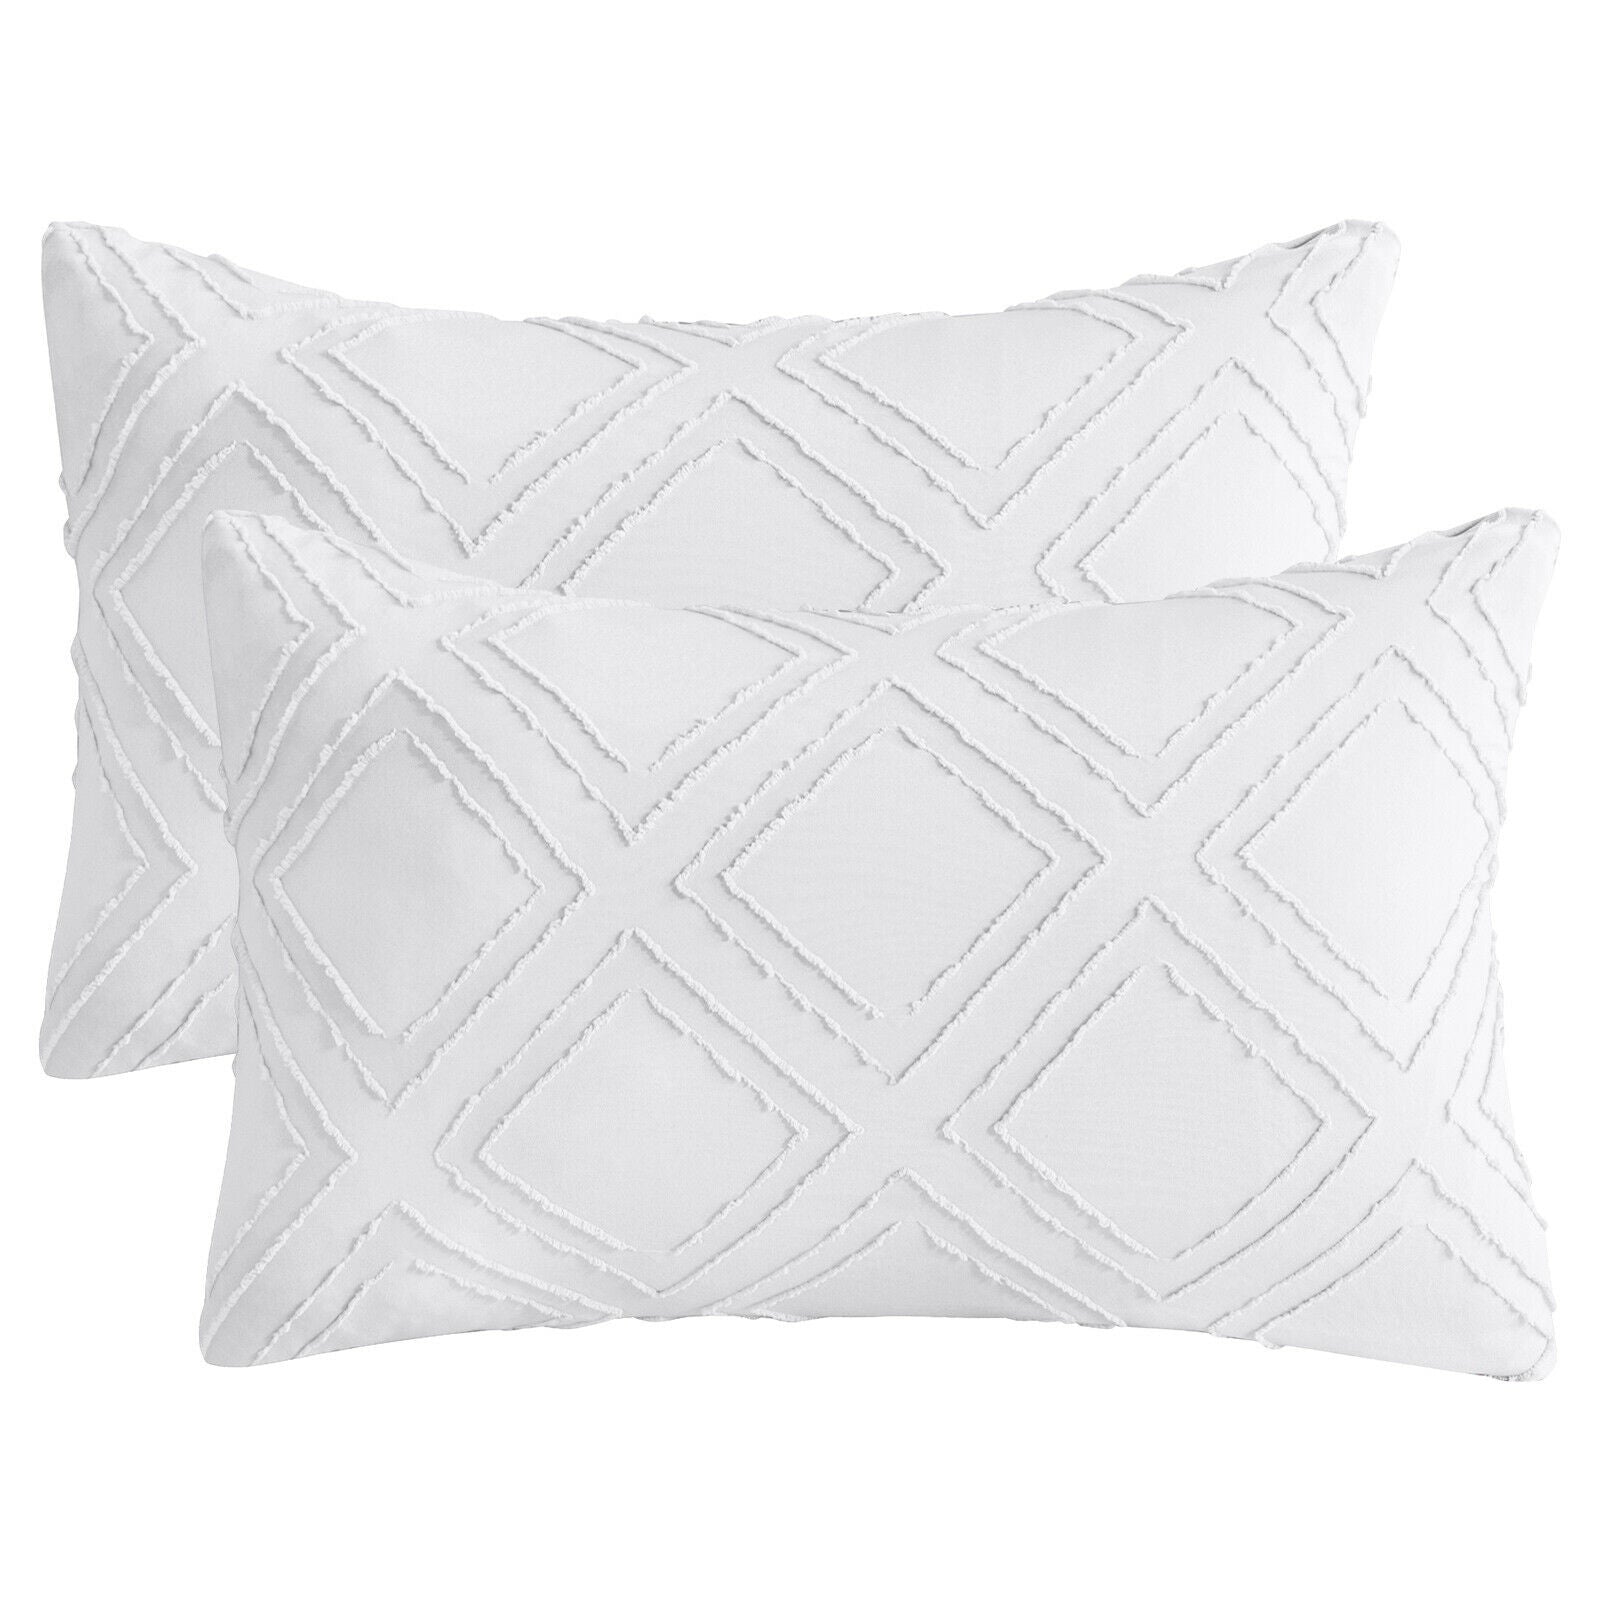 Cushion Cover Pillowcase, 2pcs white